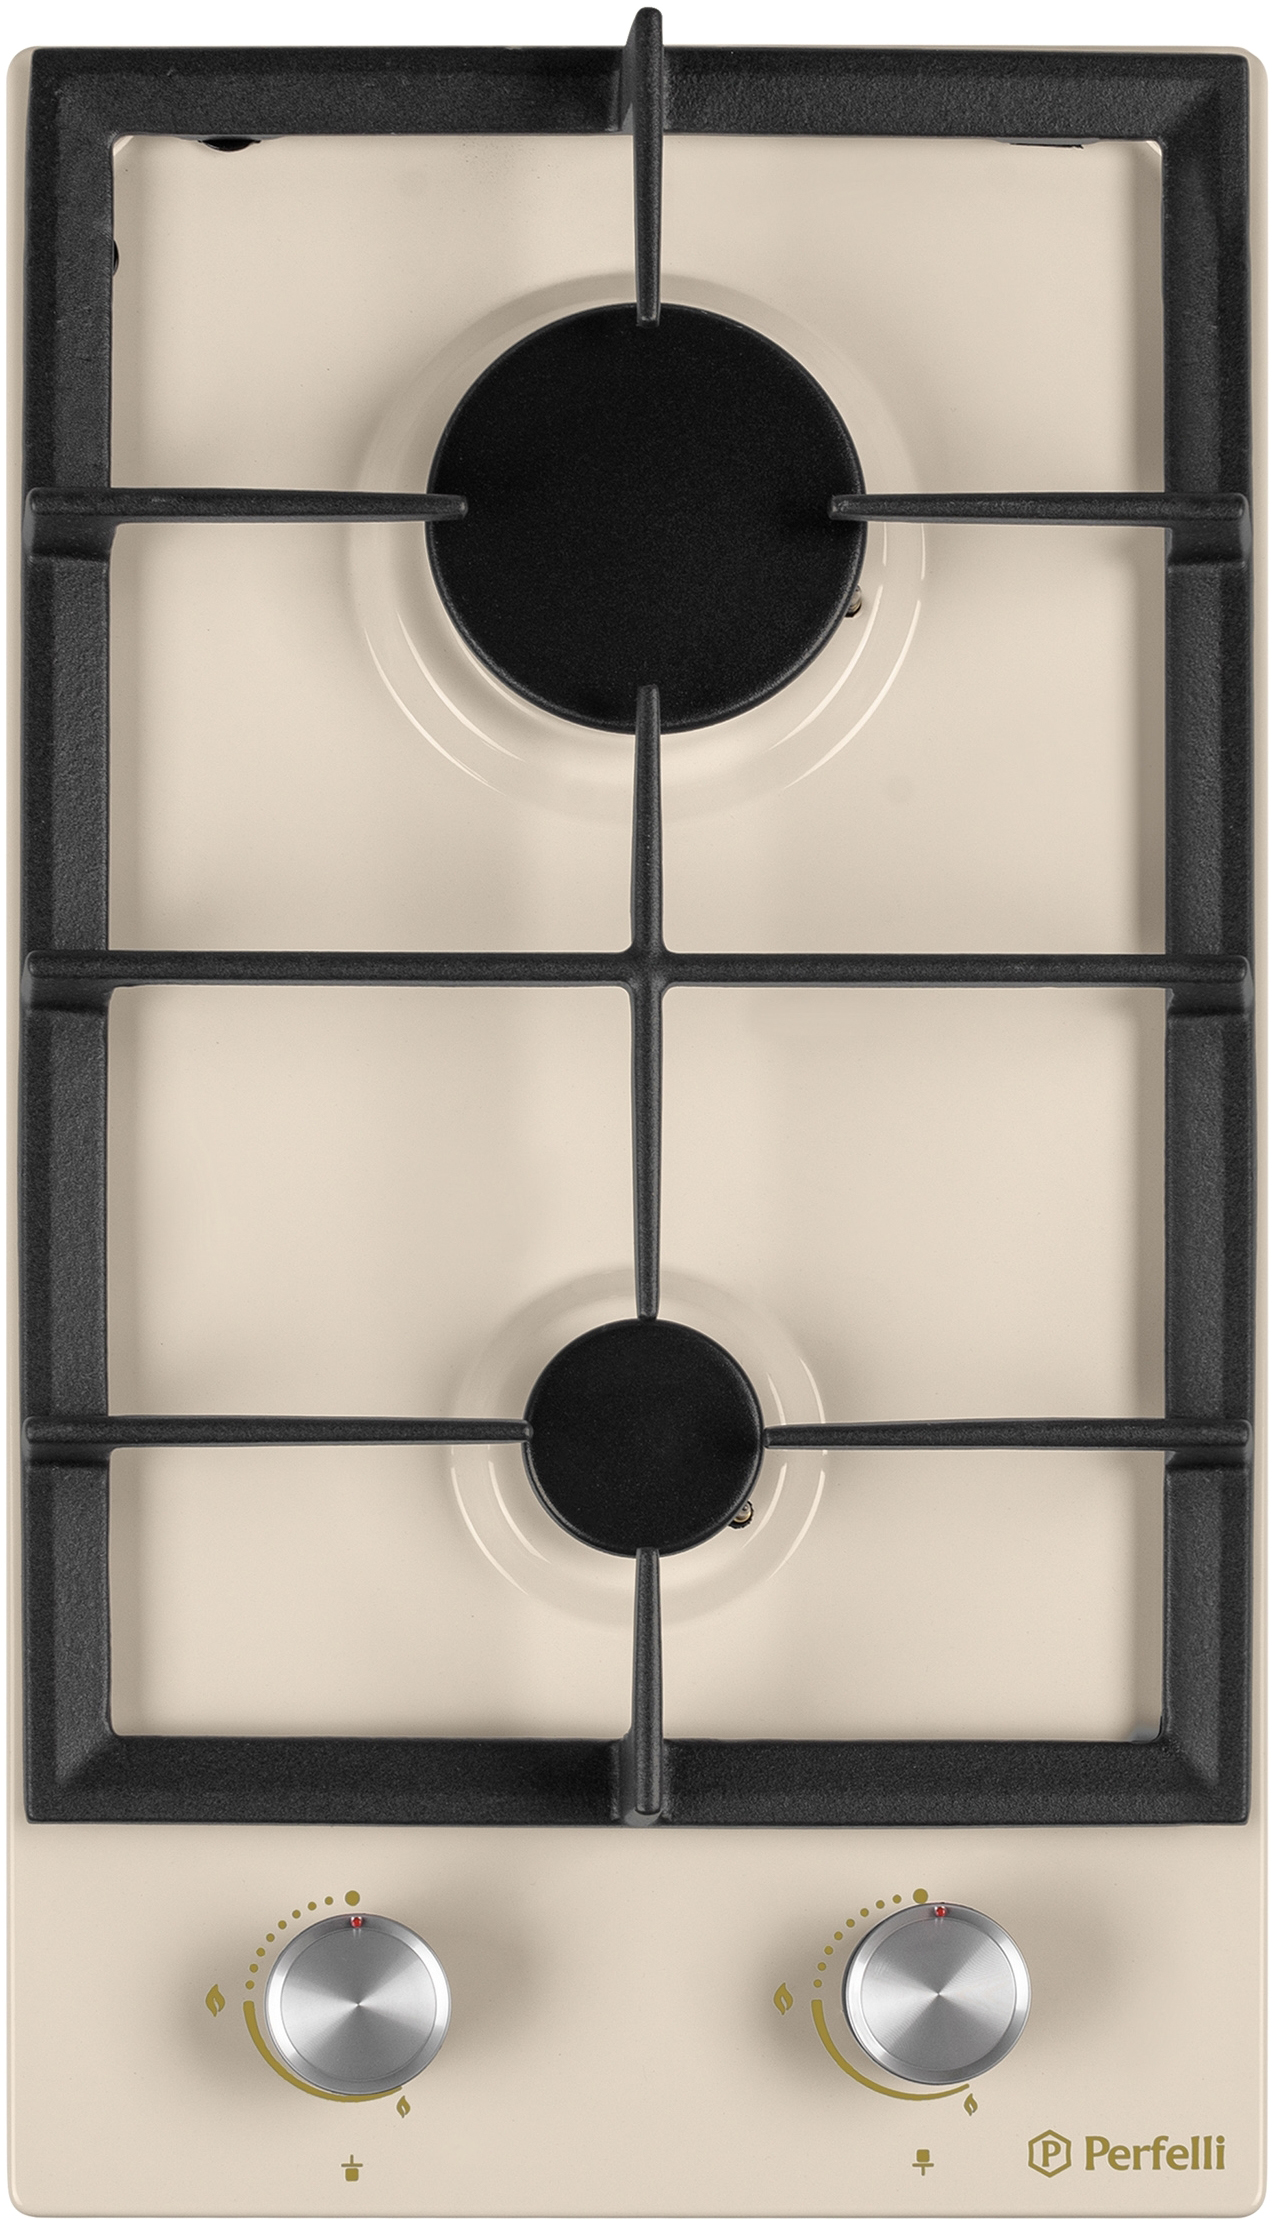 Двухконфорочная варочная поверхность Perfelli Domino HGM 31424 IV